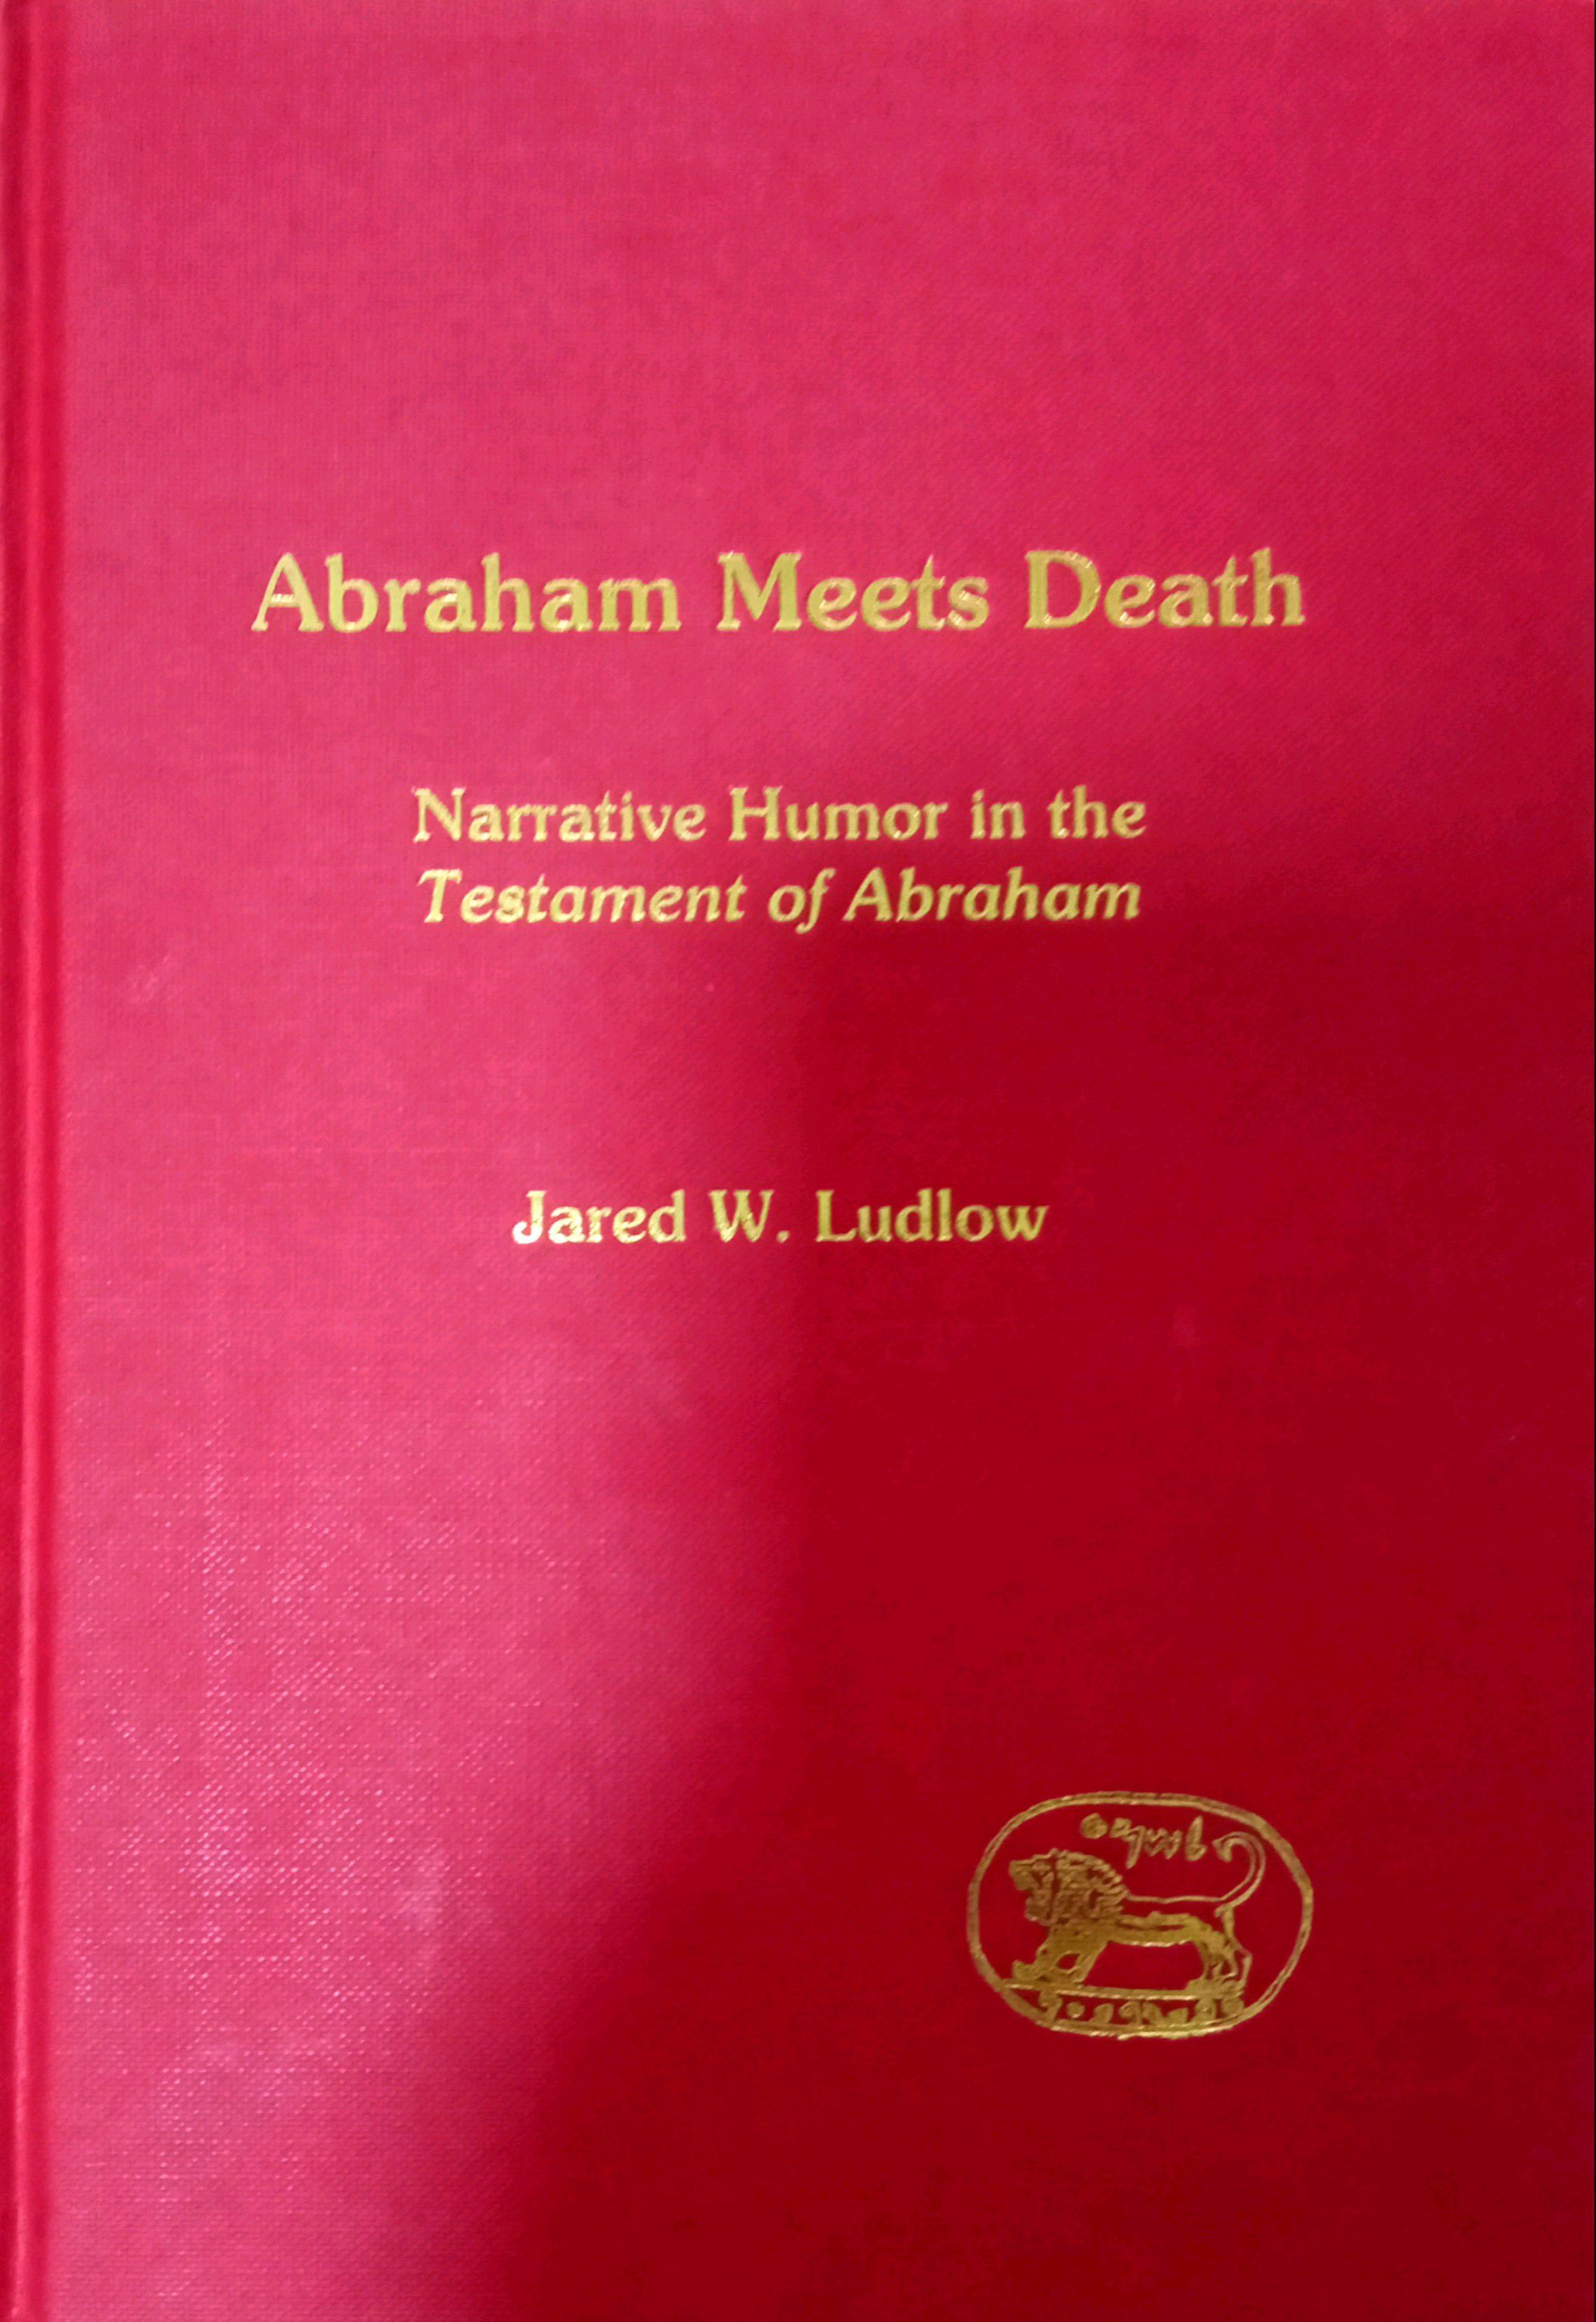 ABRAHAM MEETS DEATH